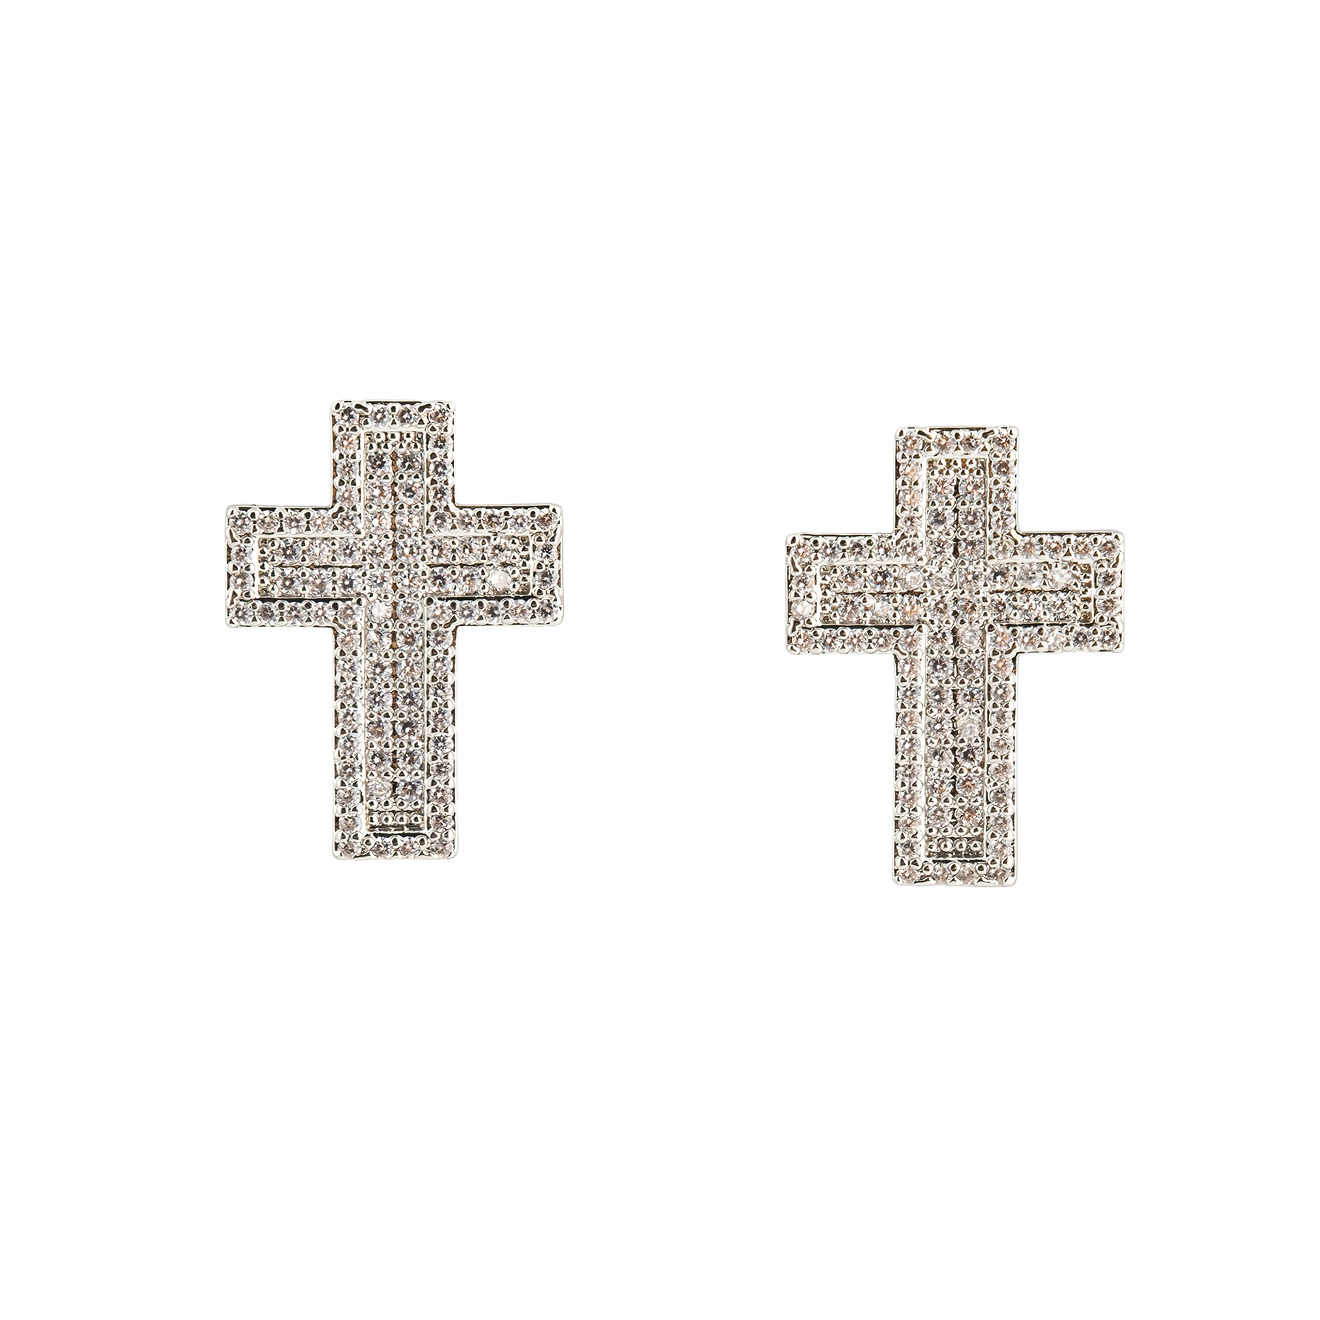 Herald Percy Серебристые серьги-кресты с кристалами herald percy черные серьги кресты с кристаллами